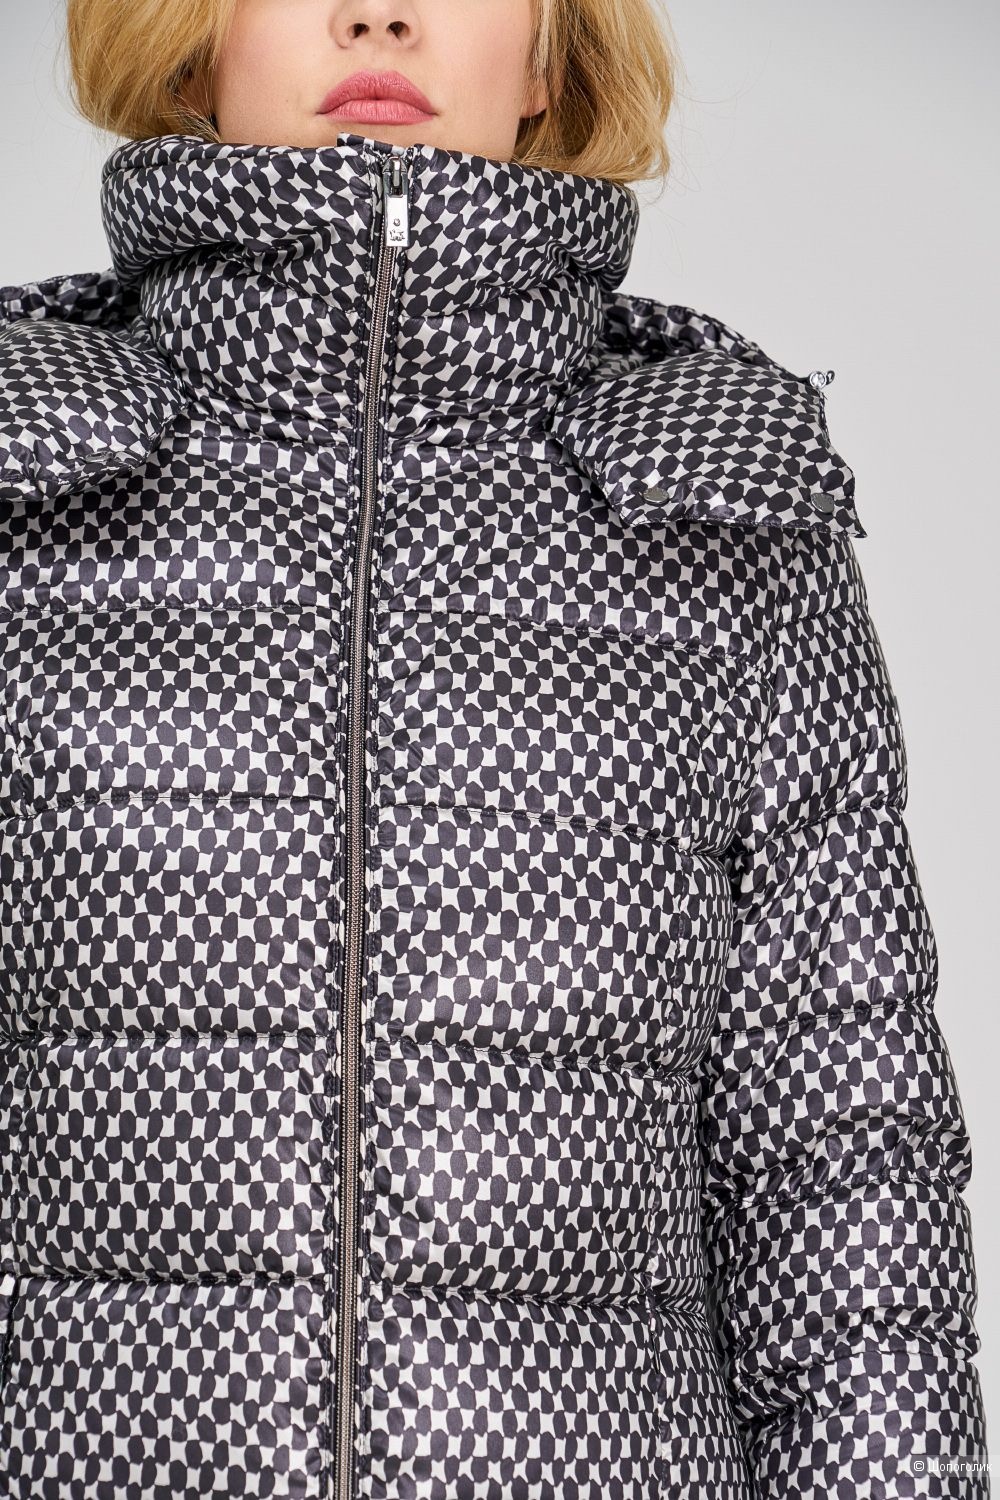 Пуховое пальто Madzerini, 46-48 размер